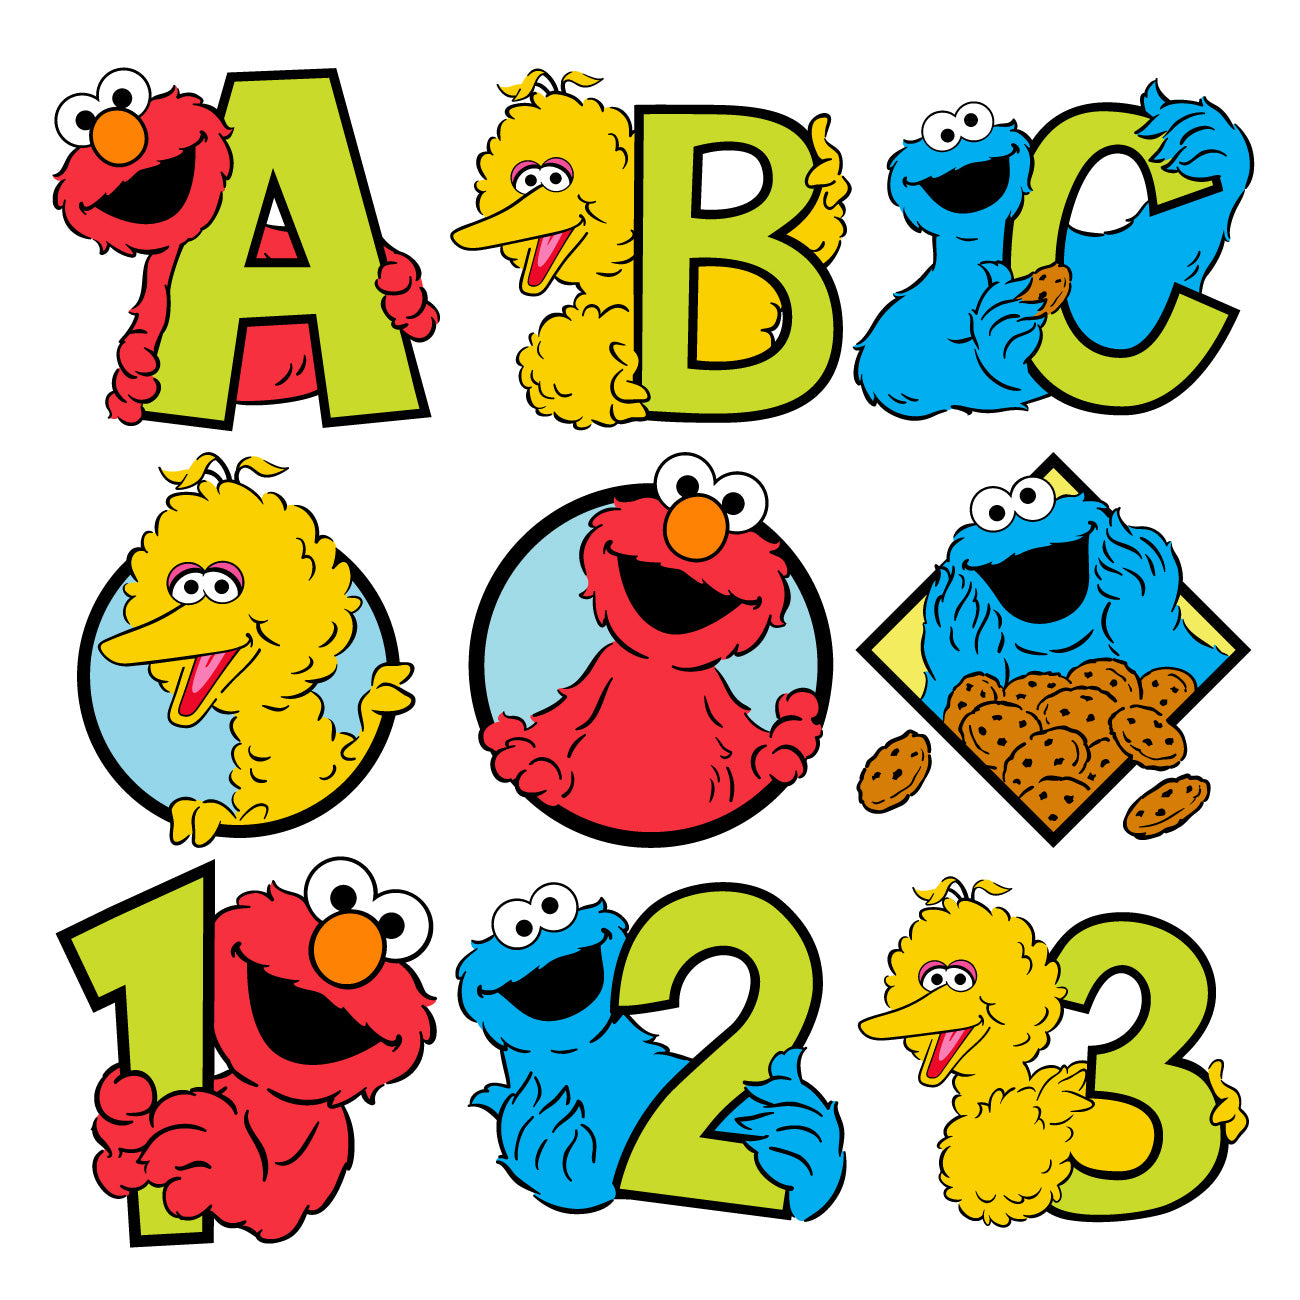 Sesame Street Elmo Big Bird Cookie Monster Abc 123 Circle Oval Diamond Edible Cake Topper Image Strips ABPID52262